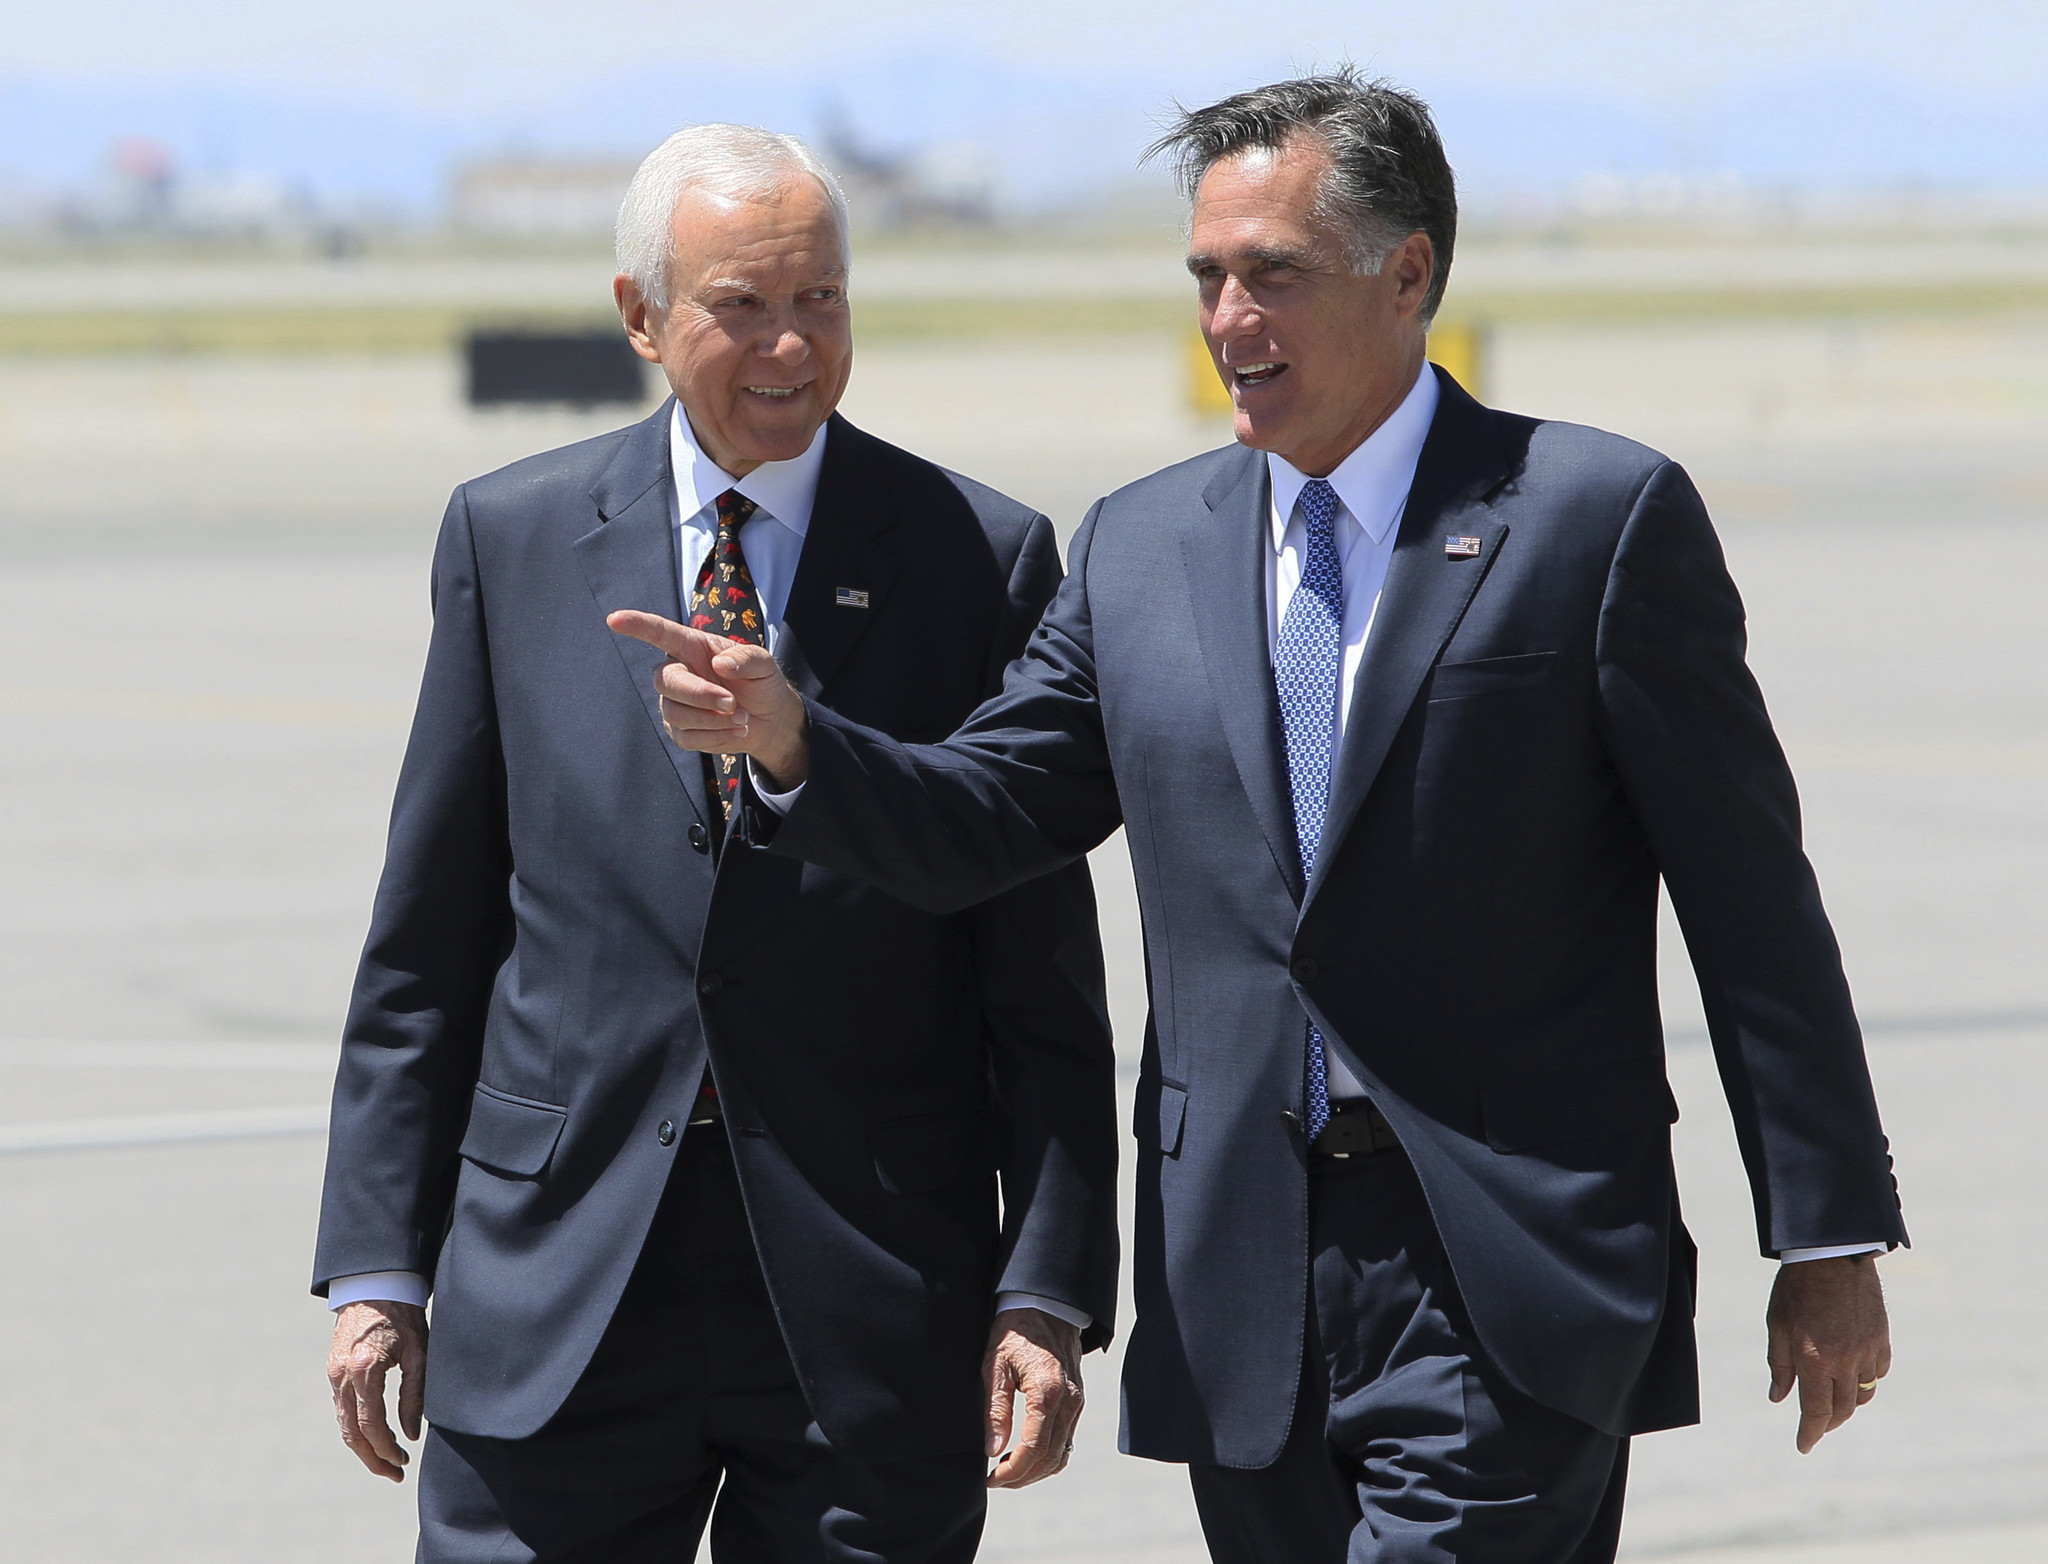 Romney makes it official: He's running for Utah Senate seat - Sun Sentinel2048 x 1564